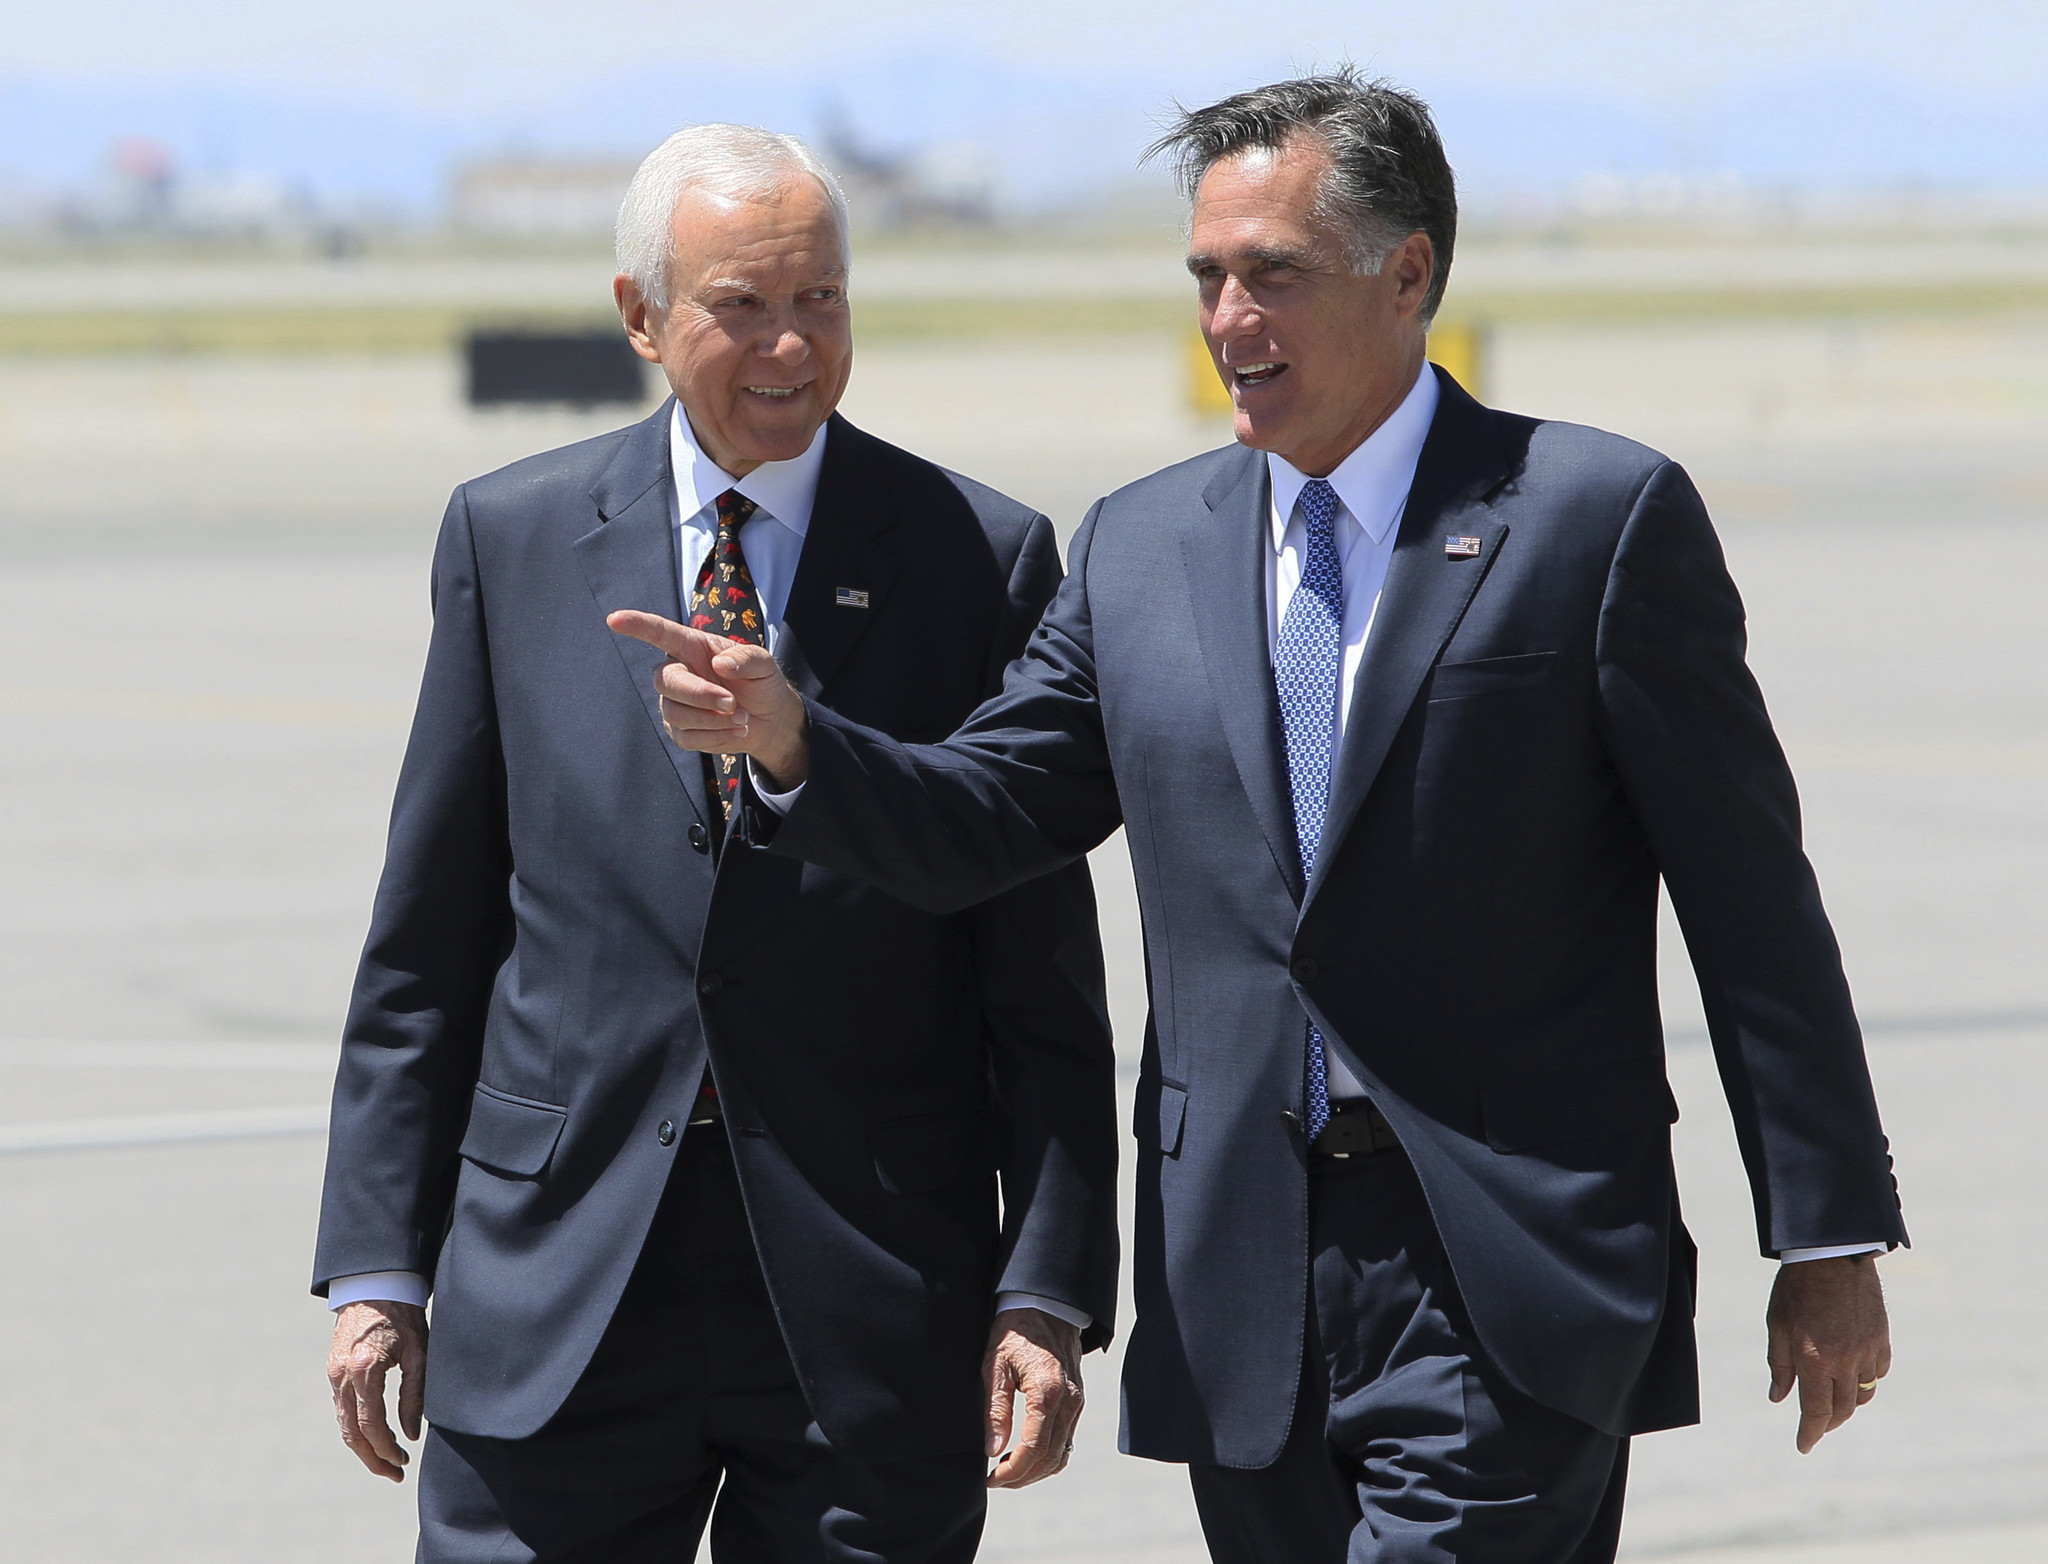 Romney makes it official: He's running for Utah Senate seat - Sun Sentinel2048 x 1564